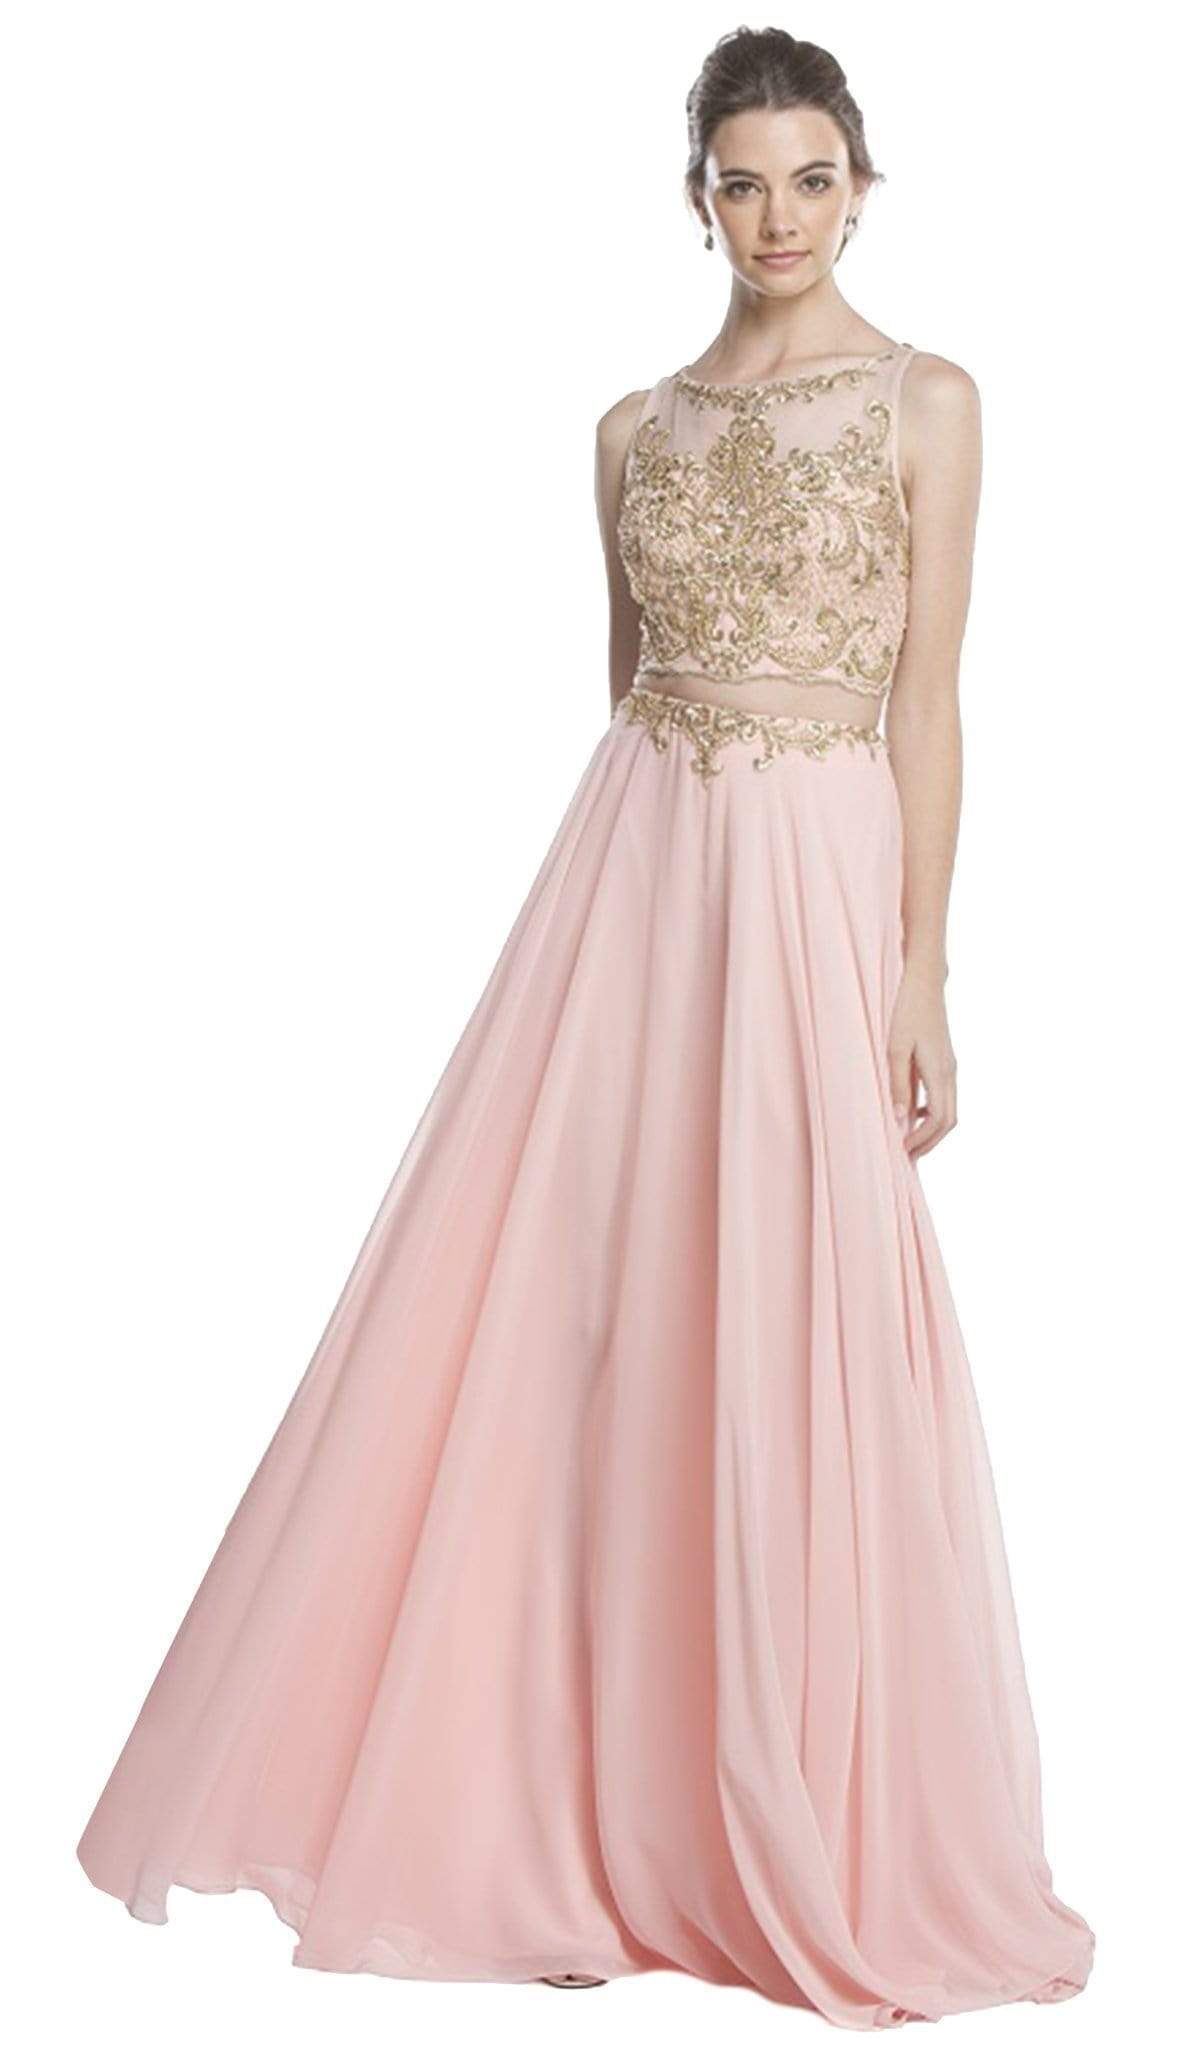 Aspeed Design - Sleeveless Sheer Bateau A-line Prom Dress
